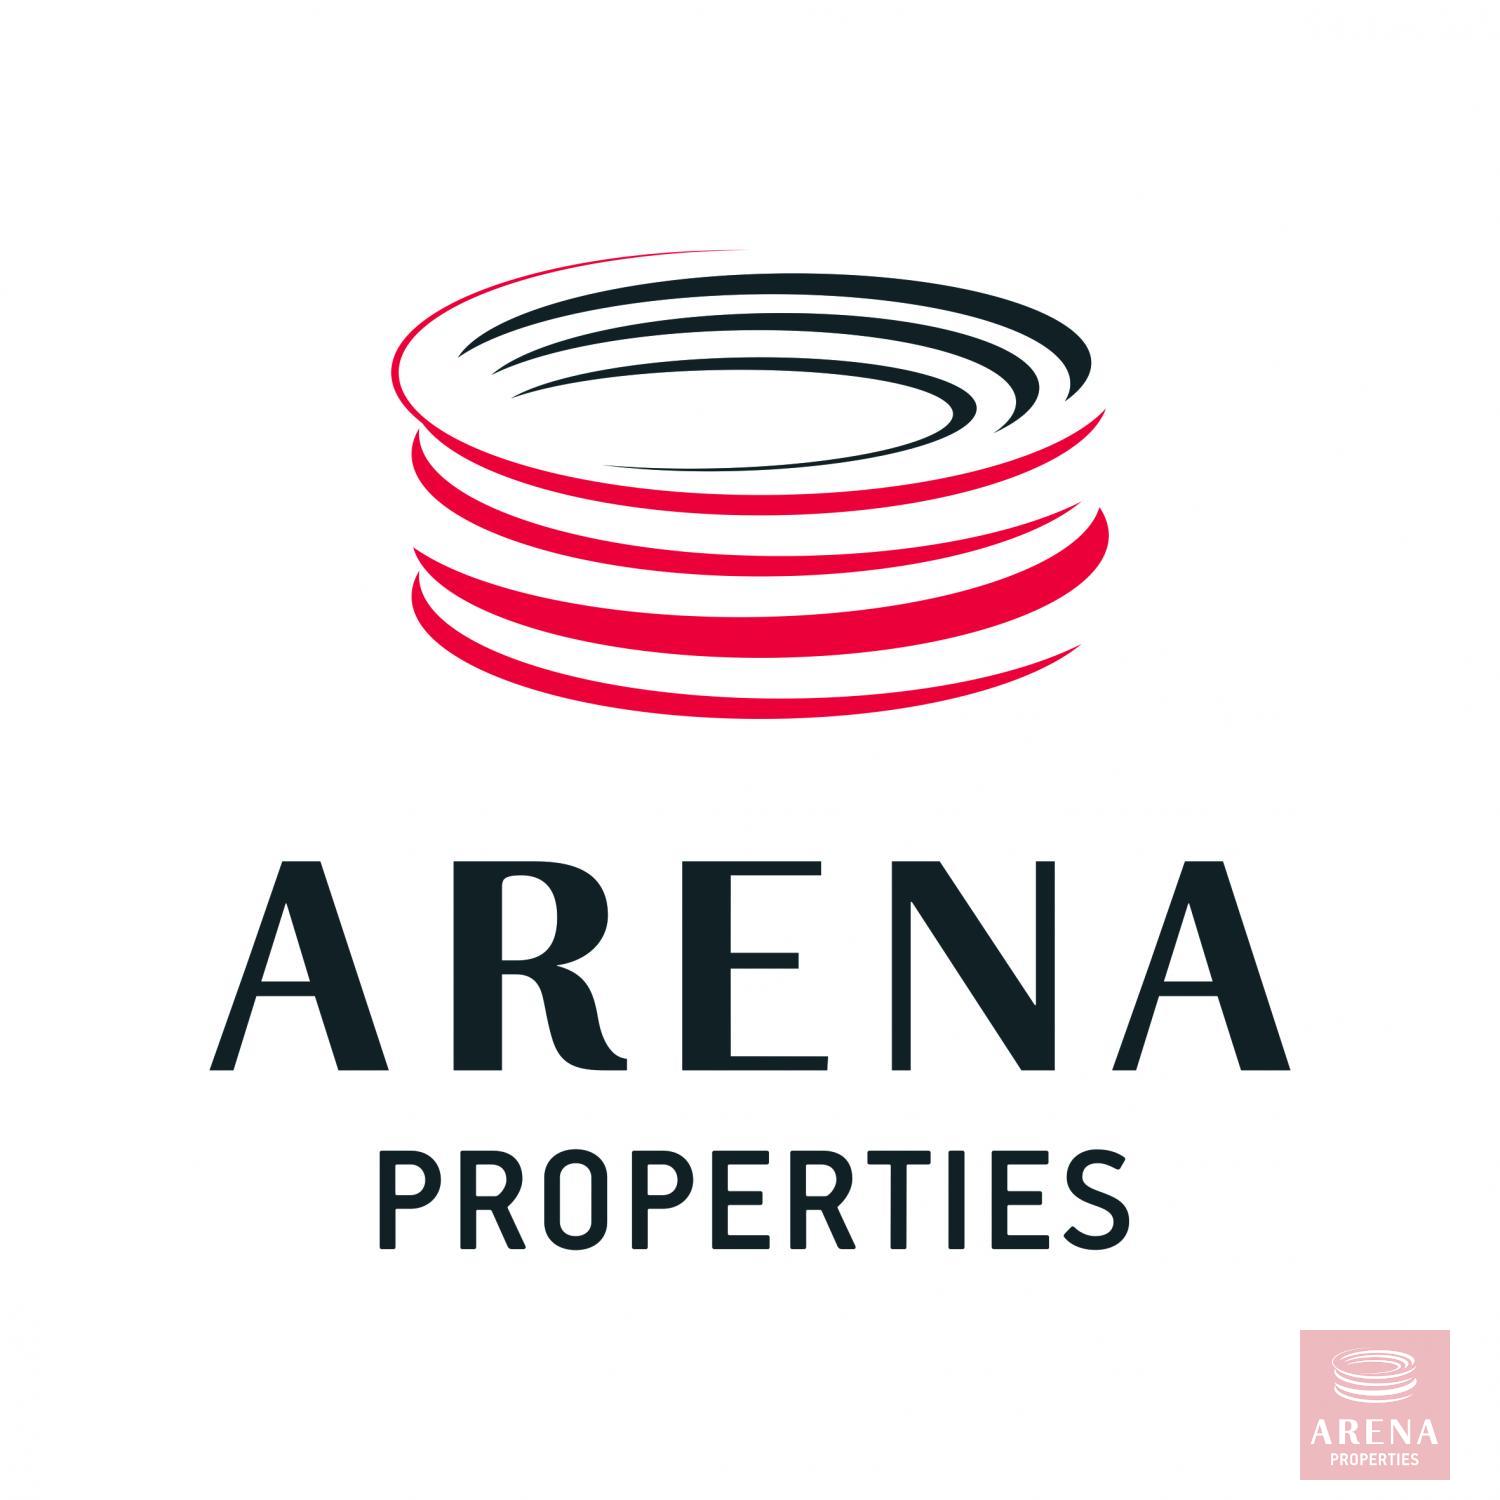 arena properties logo white 5